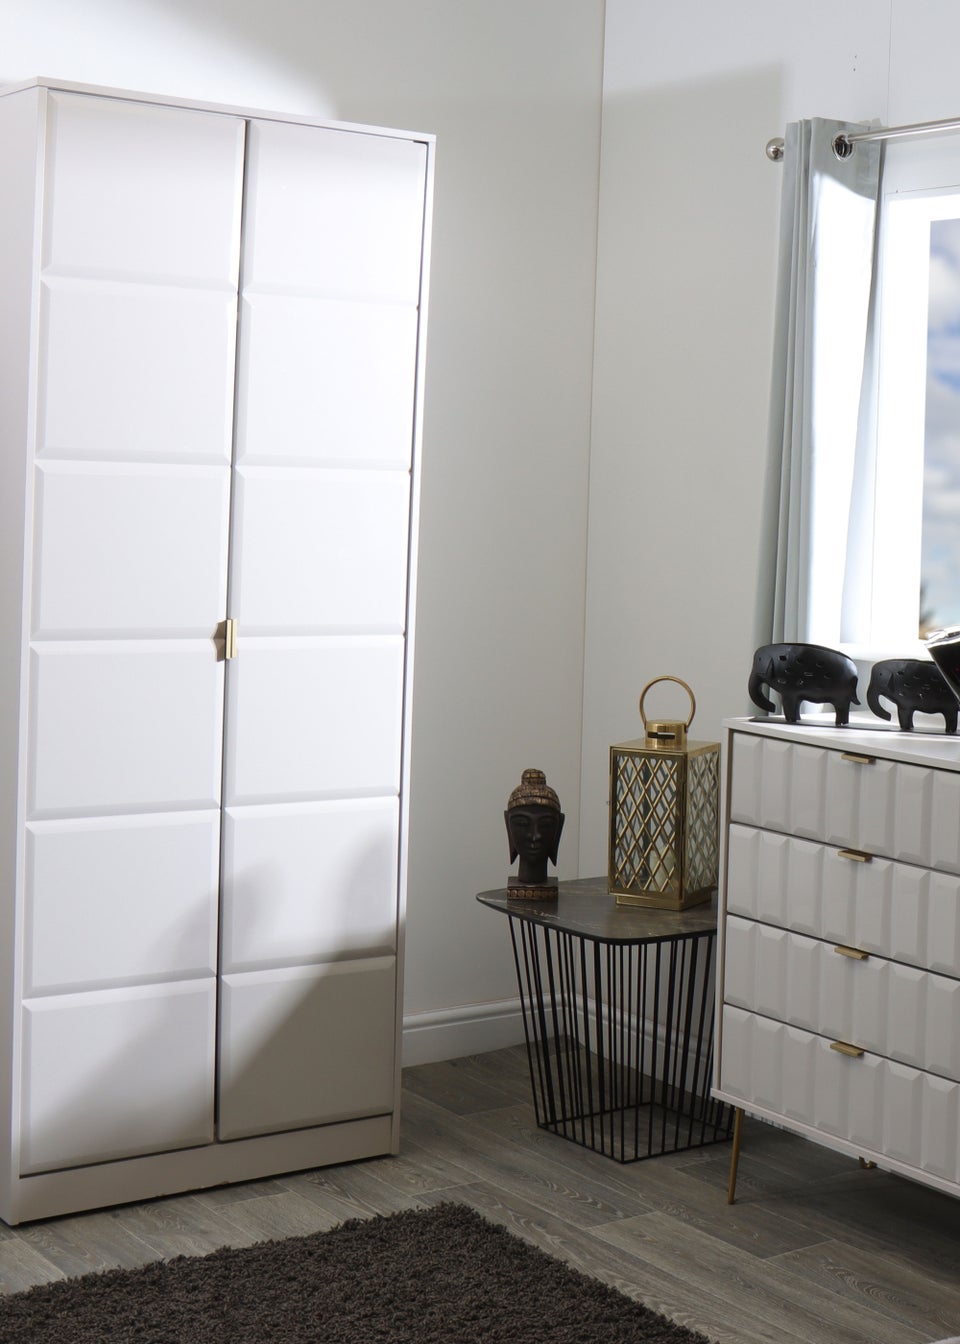 Swift Cube 2 Door 2 Drawer Tall Wardrobe (197cm x 53cm x 74cm)